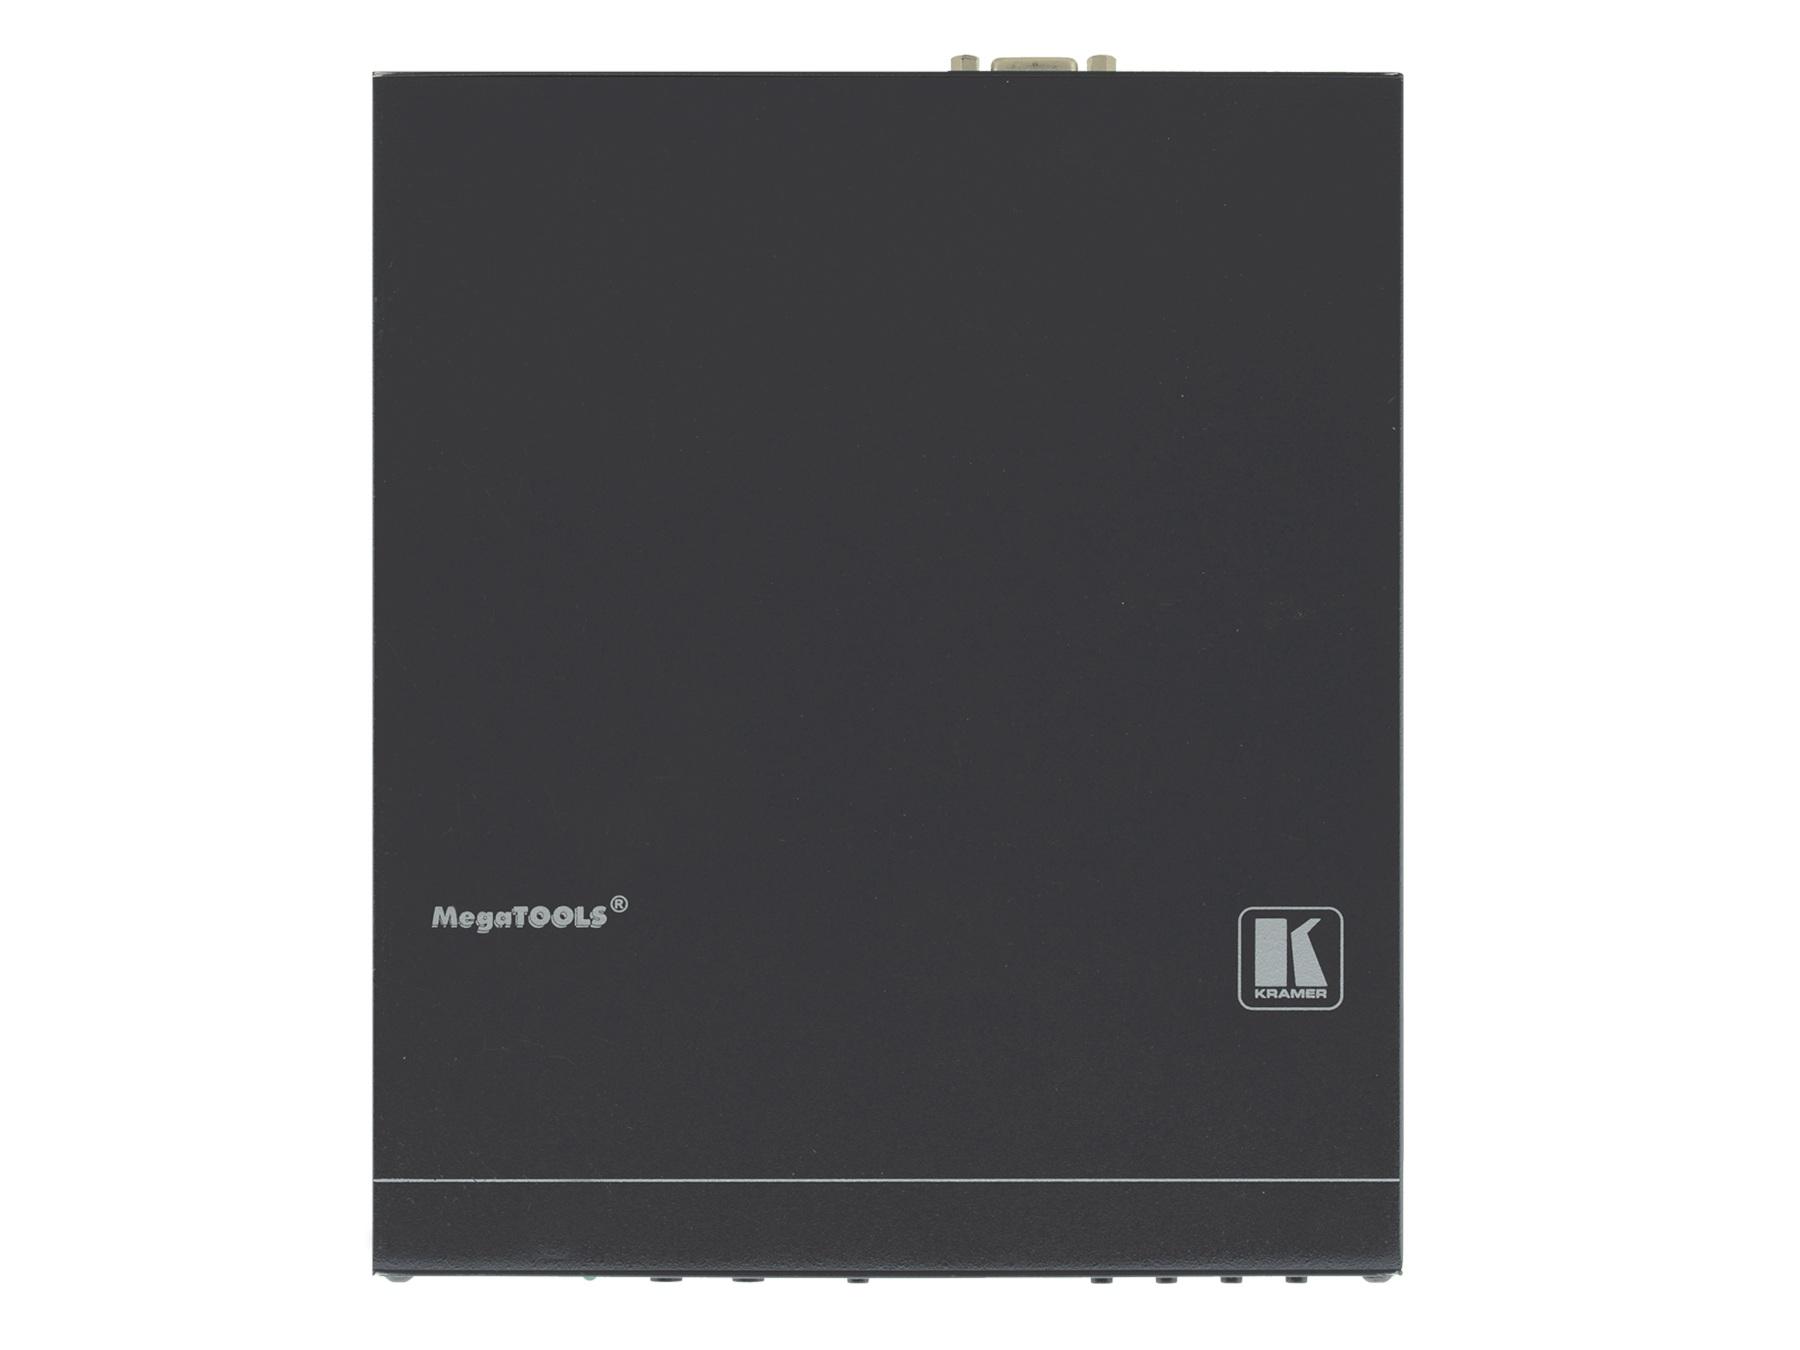 Kramer VP-428H2 4K60 HDCP 2.2 DisplayPort/HDMI/VGA Auto Switcher/Scaler and PoE Provider over HDBaseT